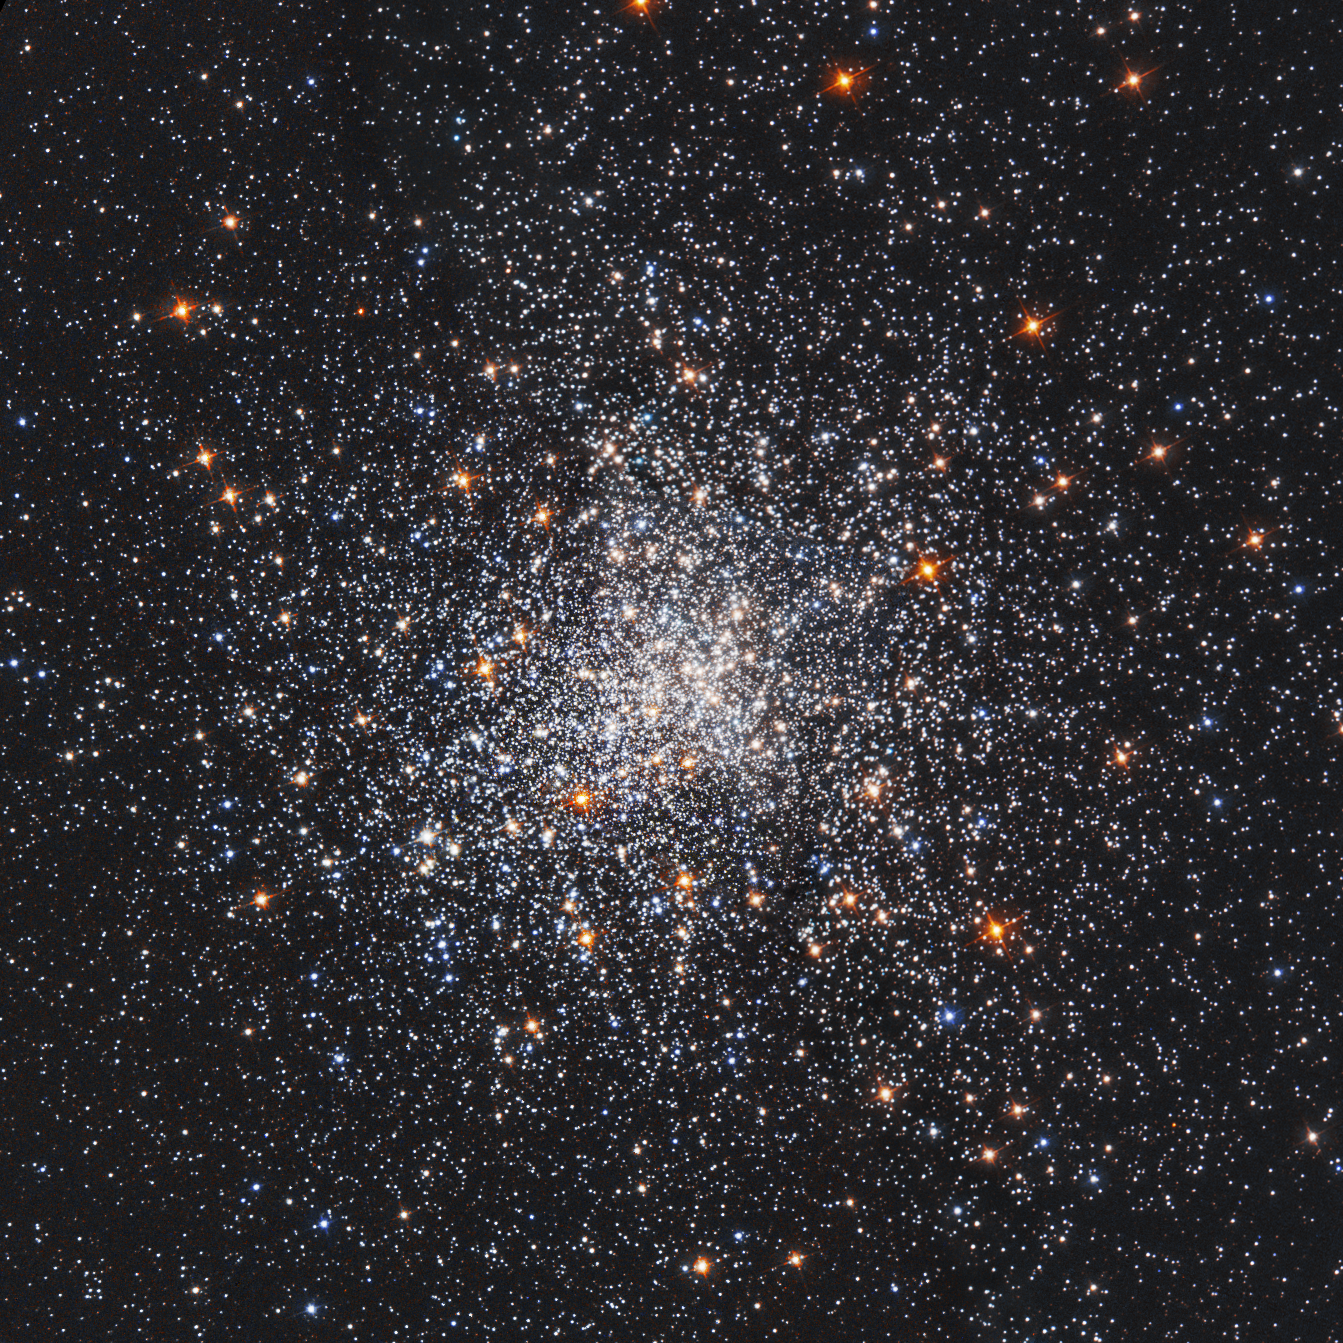 M79, as seen by Hubble